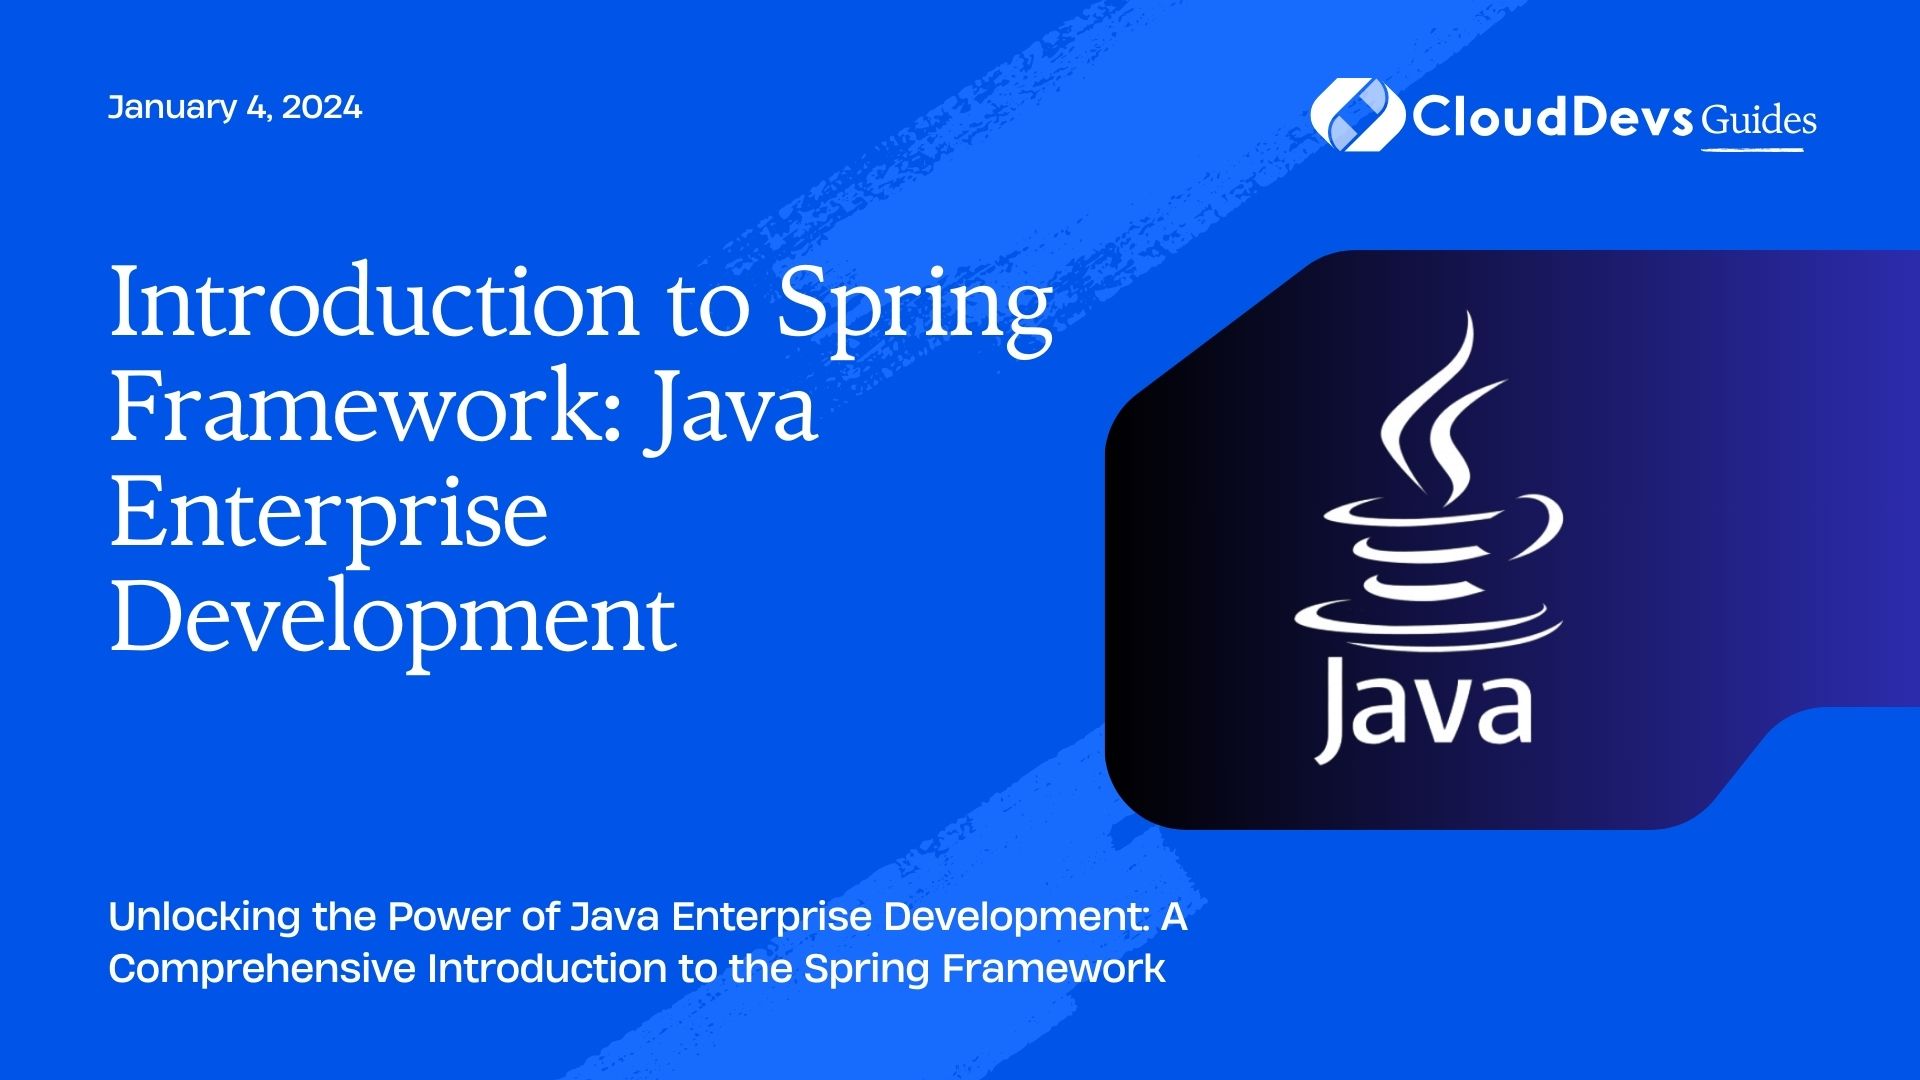 1. Introduction to Spring Framework